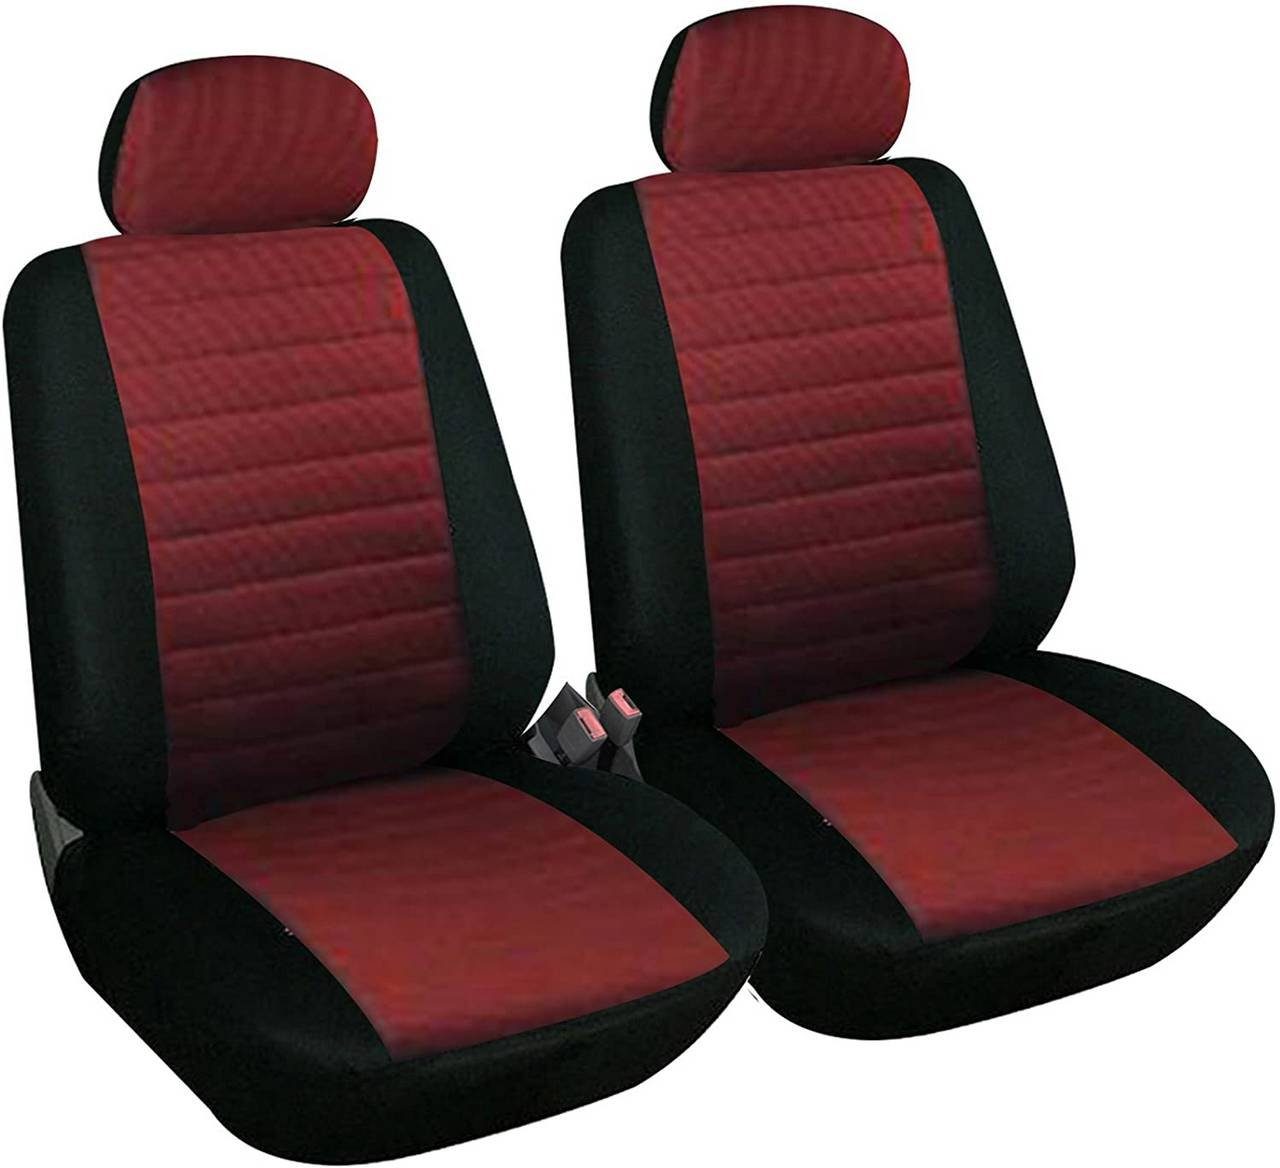 Auto-Sitzbezüge Vordersitze Auto-Sitzbezug Set Fahrersitz und